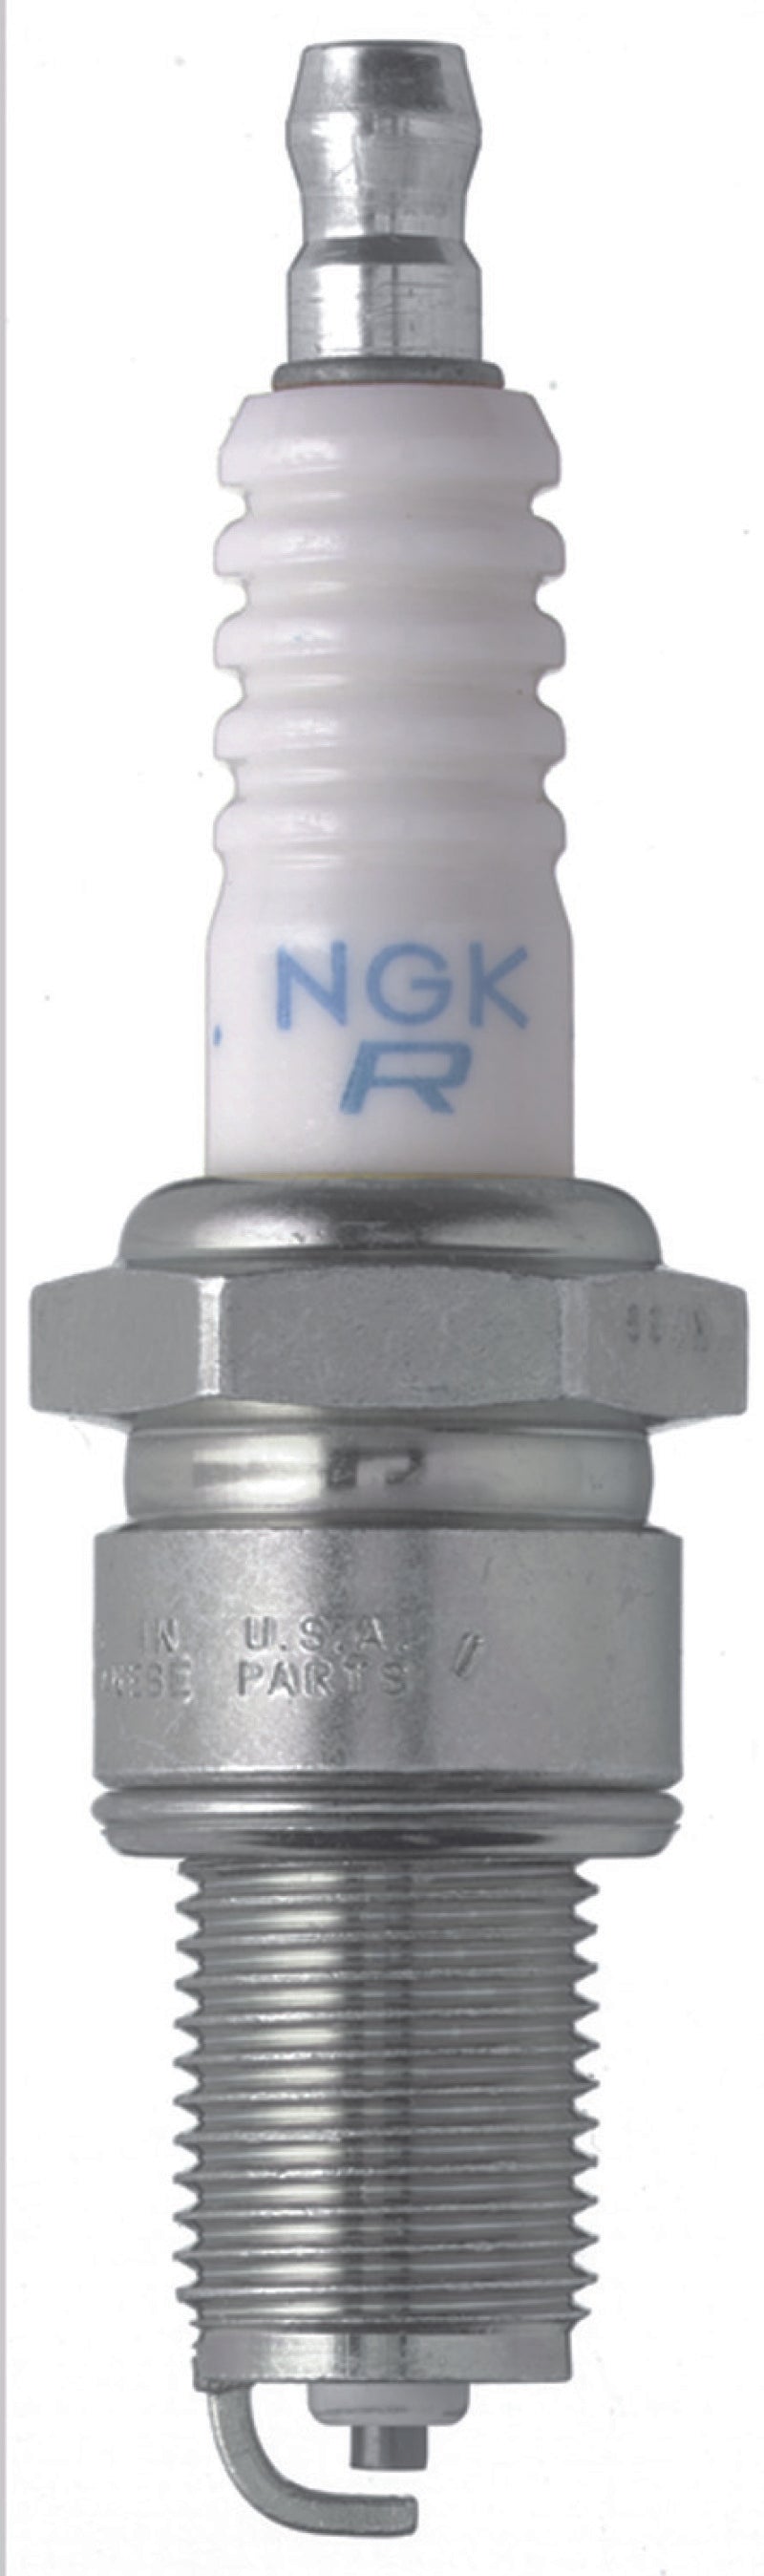 NGK Traditional Spark Plug Box of 4 (BPR6ES)